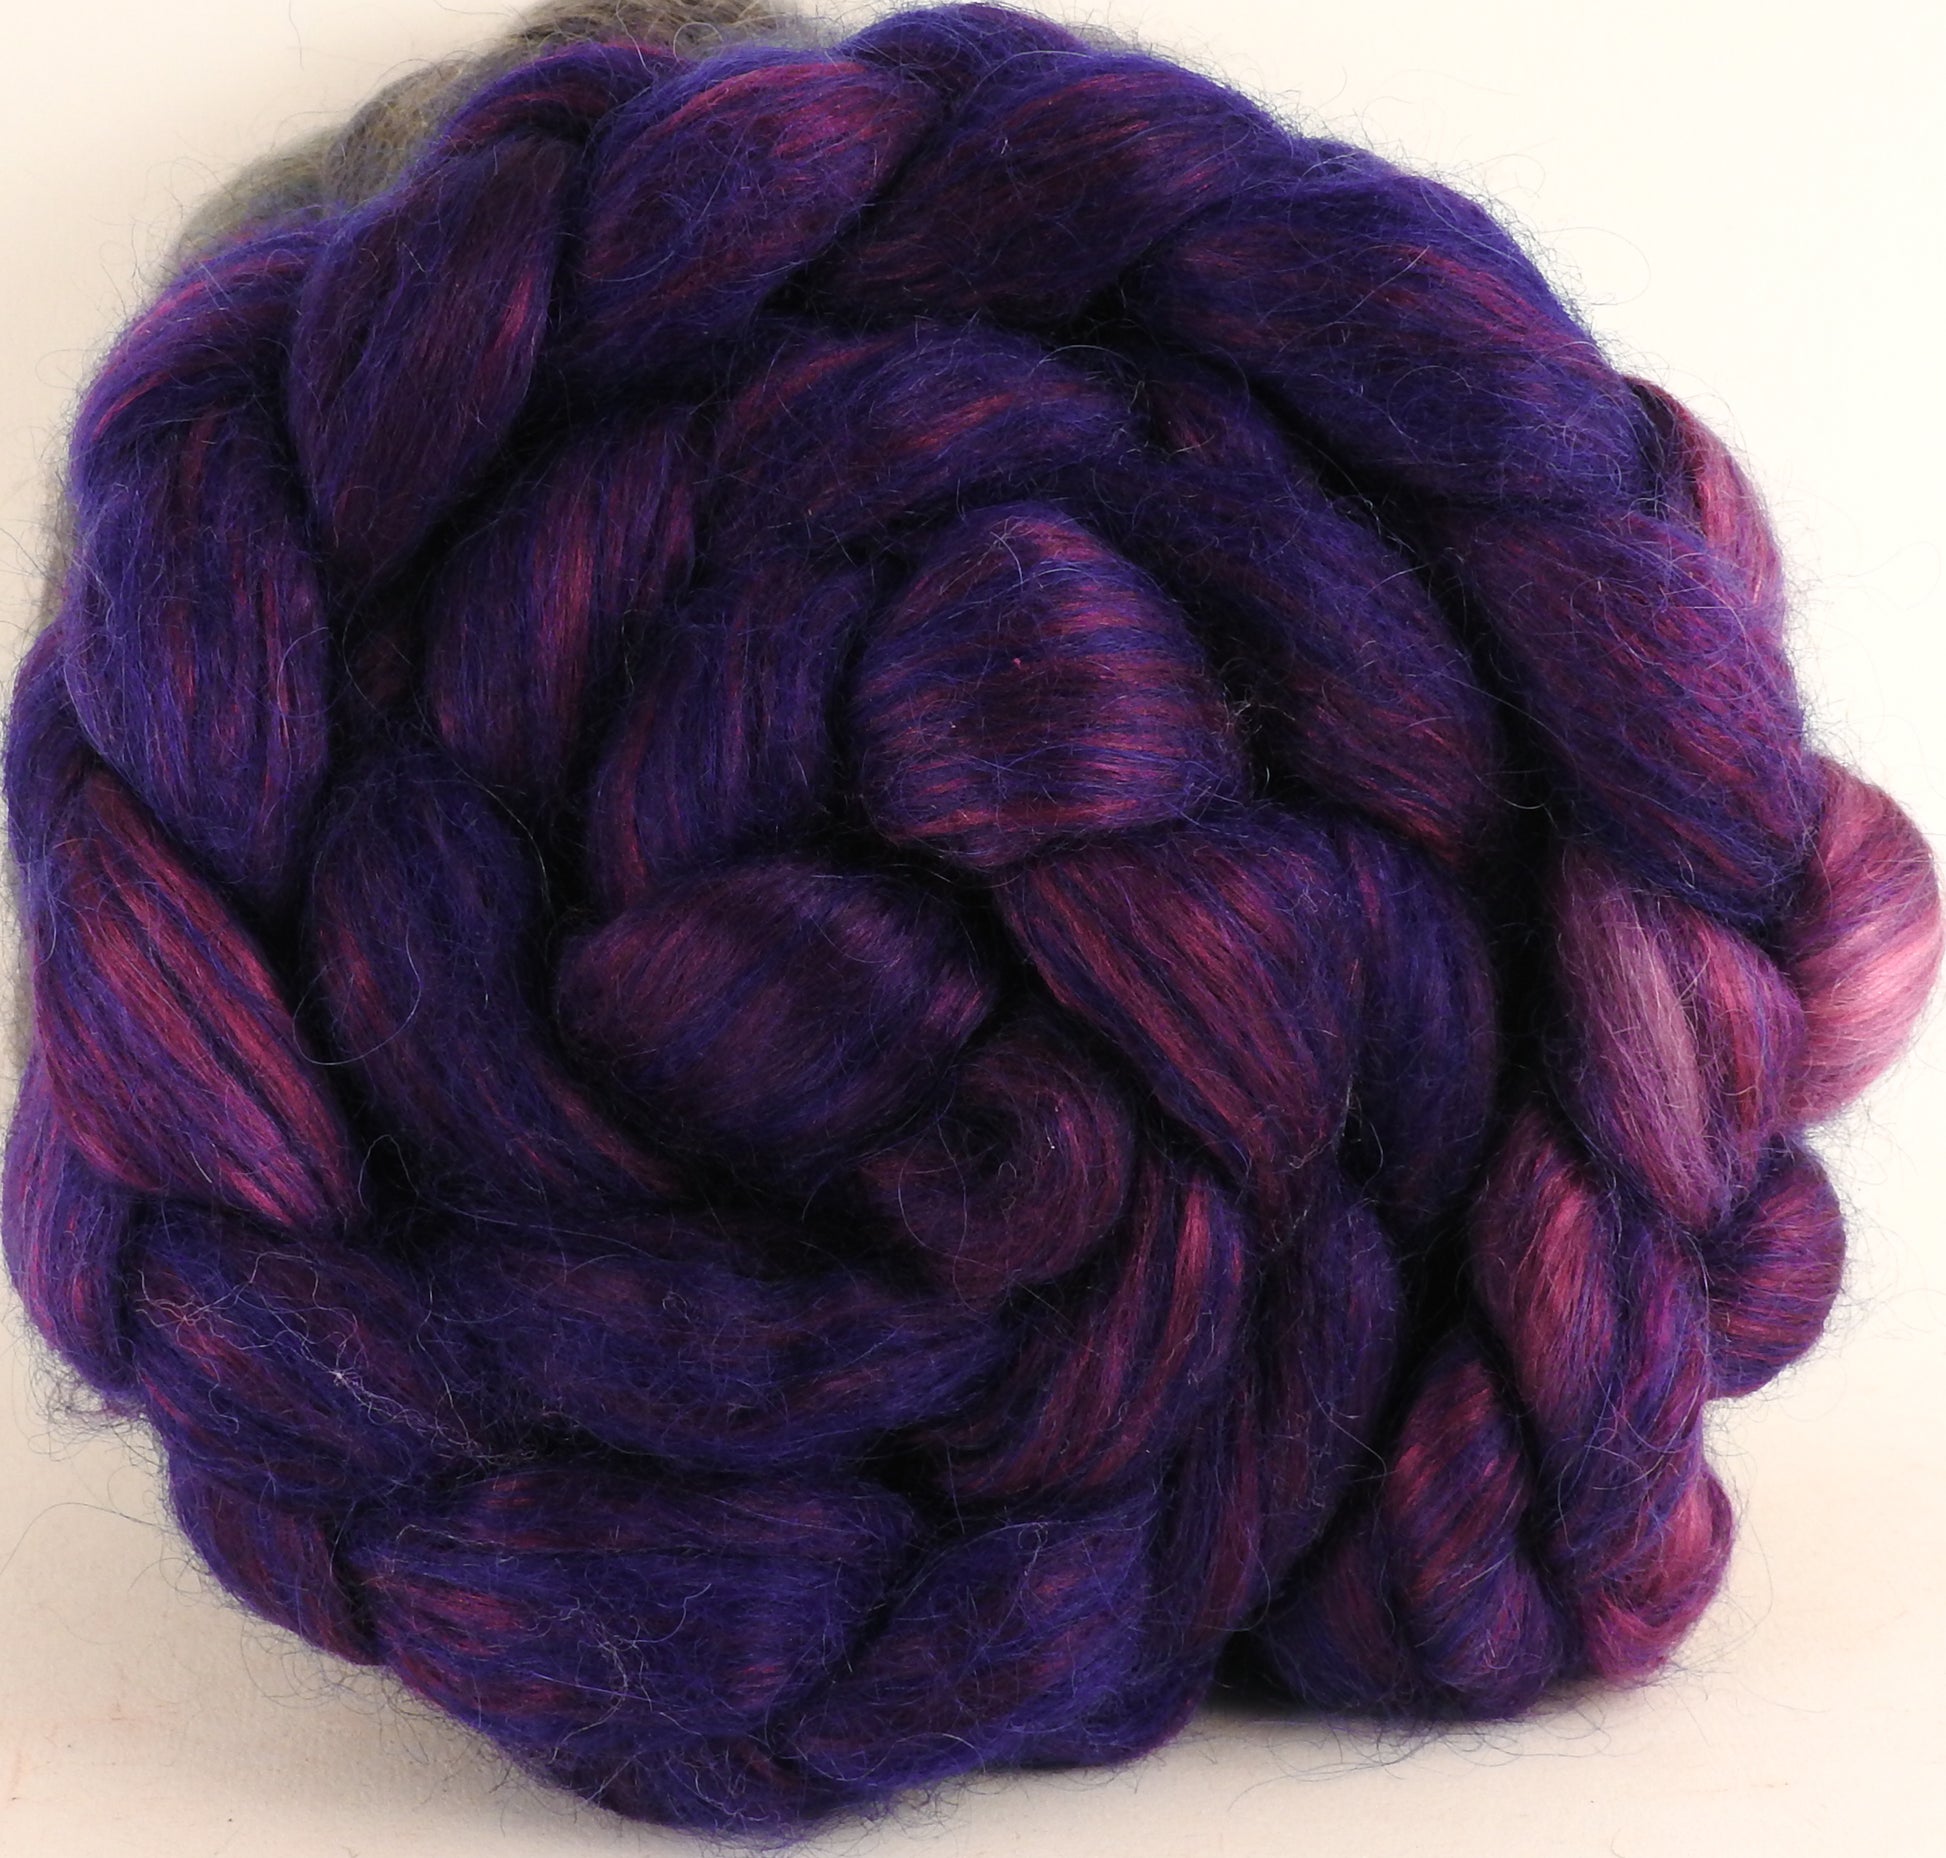 Hand-dyed wensleydale/ mulberry silk roving ( 65/35) - Damson Plum - (5.4 oz.) - Inglenook Fibers